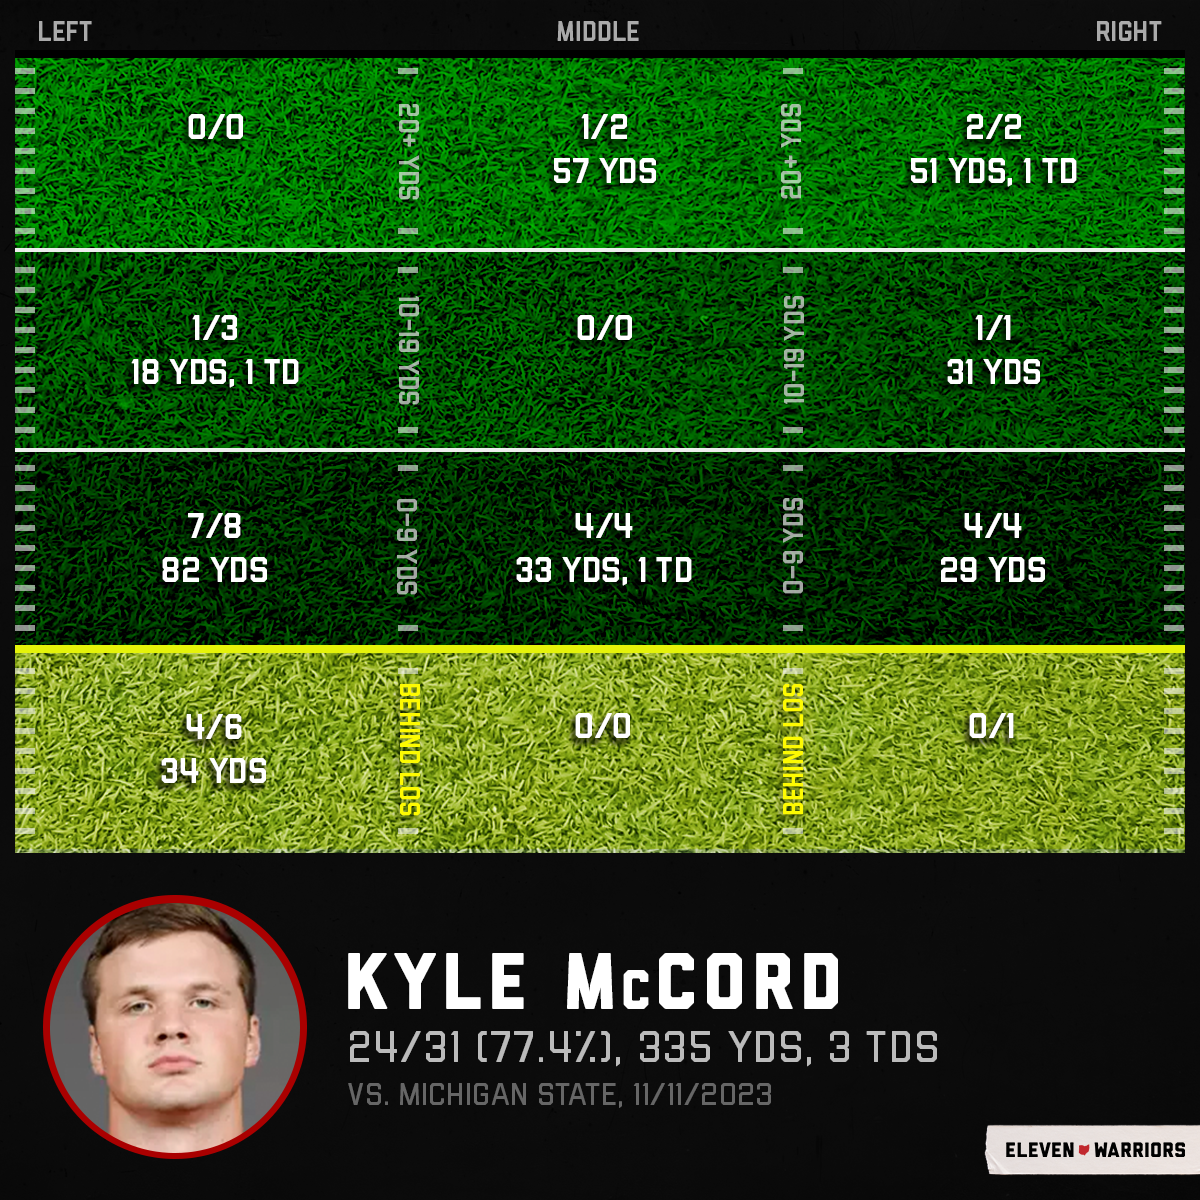 Kyle McCord's passing chart vs. Michigan State